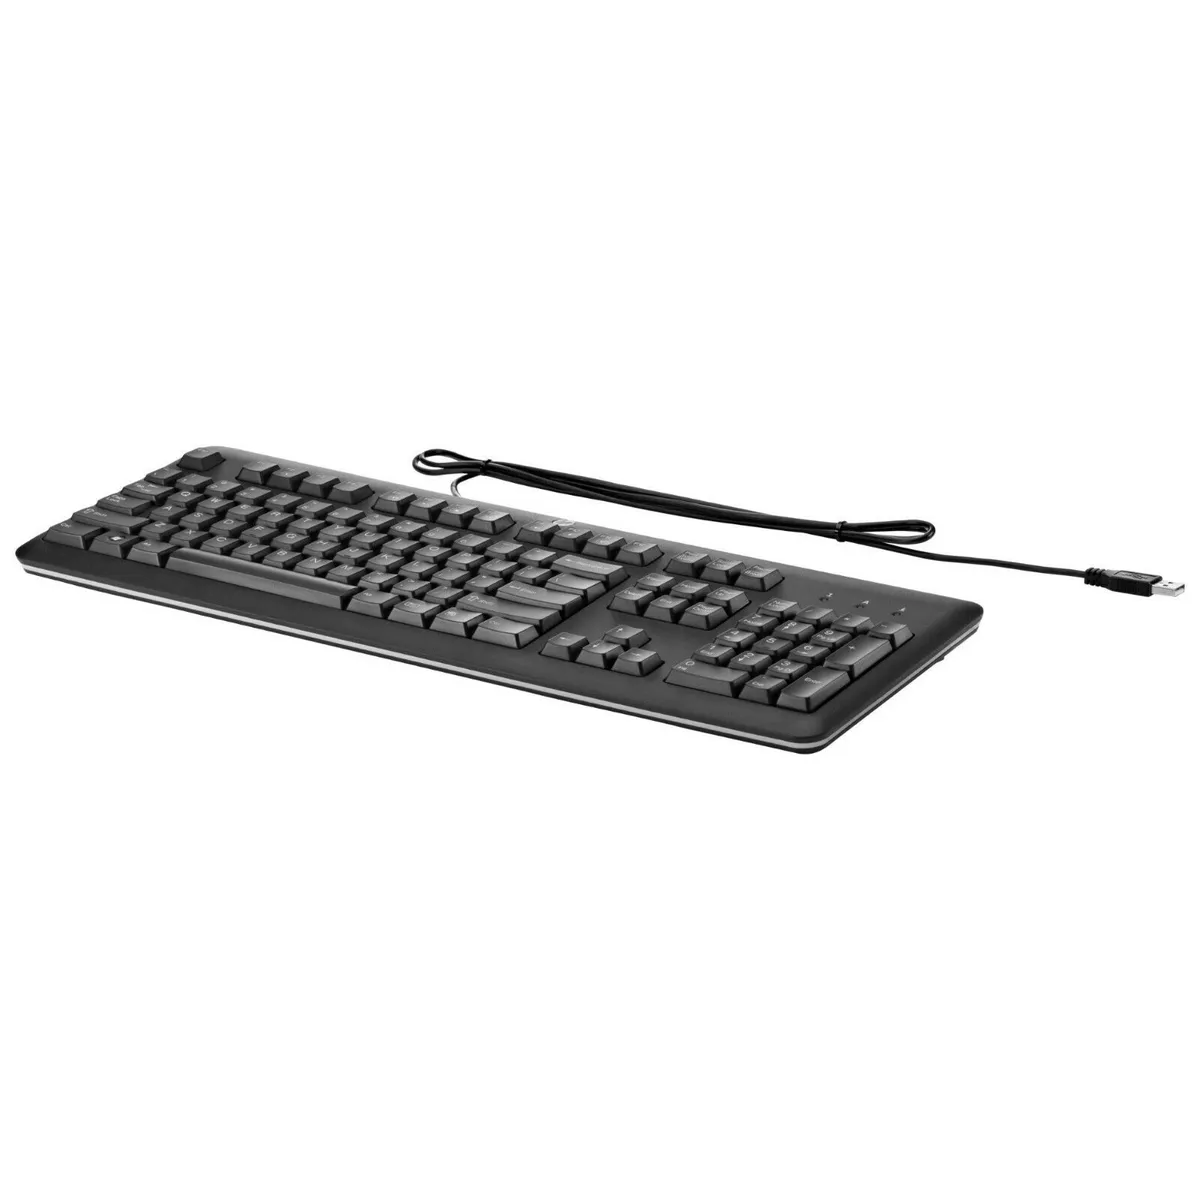 UK USB Keyboard and Mouse Set USB - HP Keyboard Fujitsu Mouse